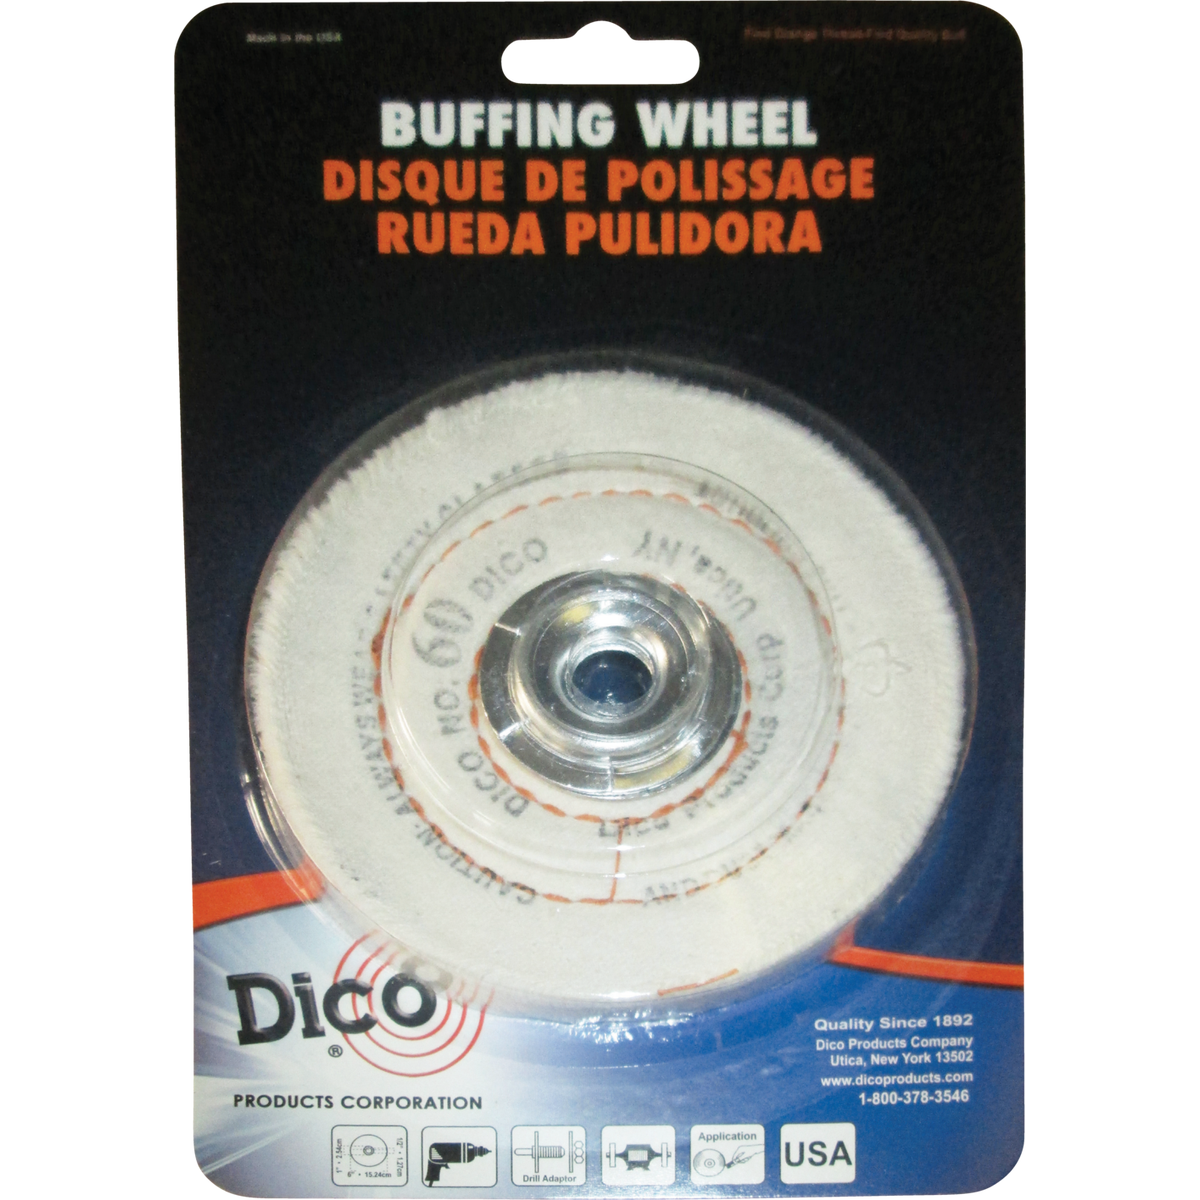 Buffing Wheel